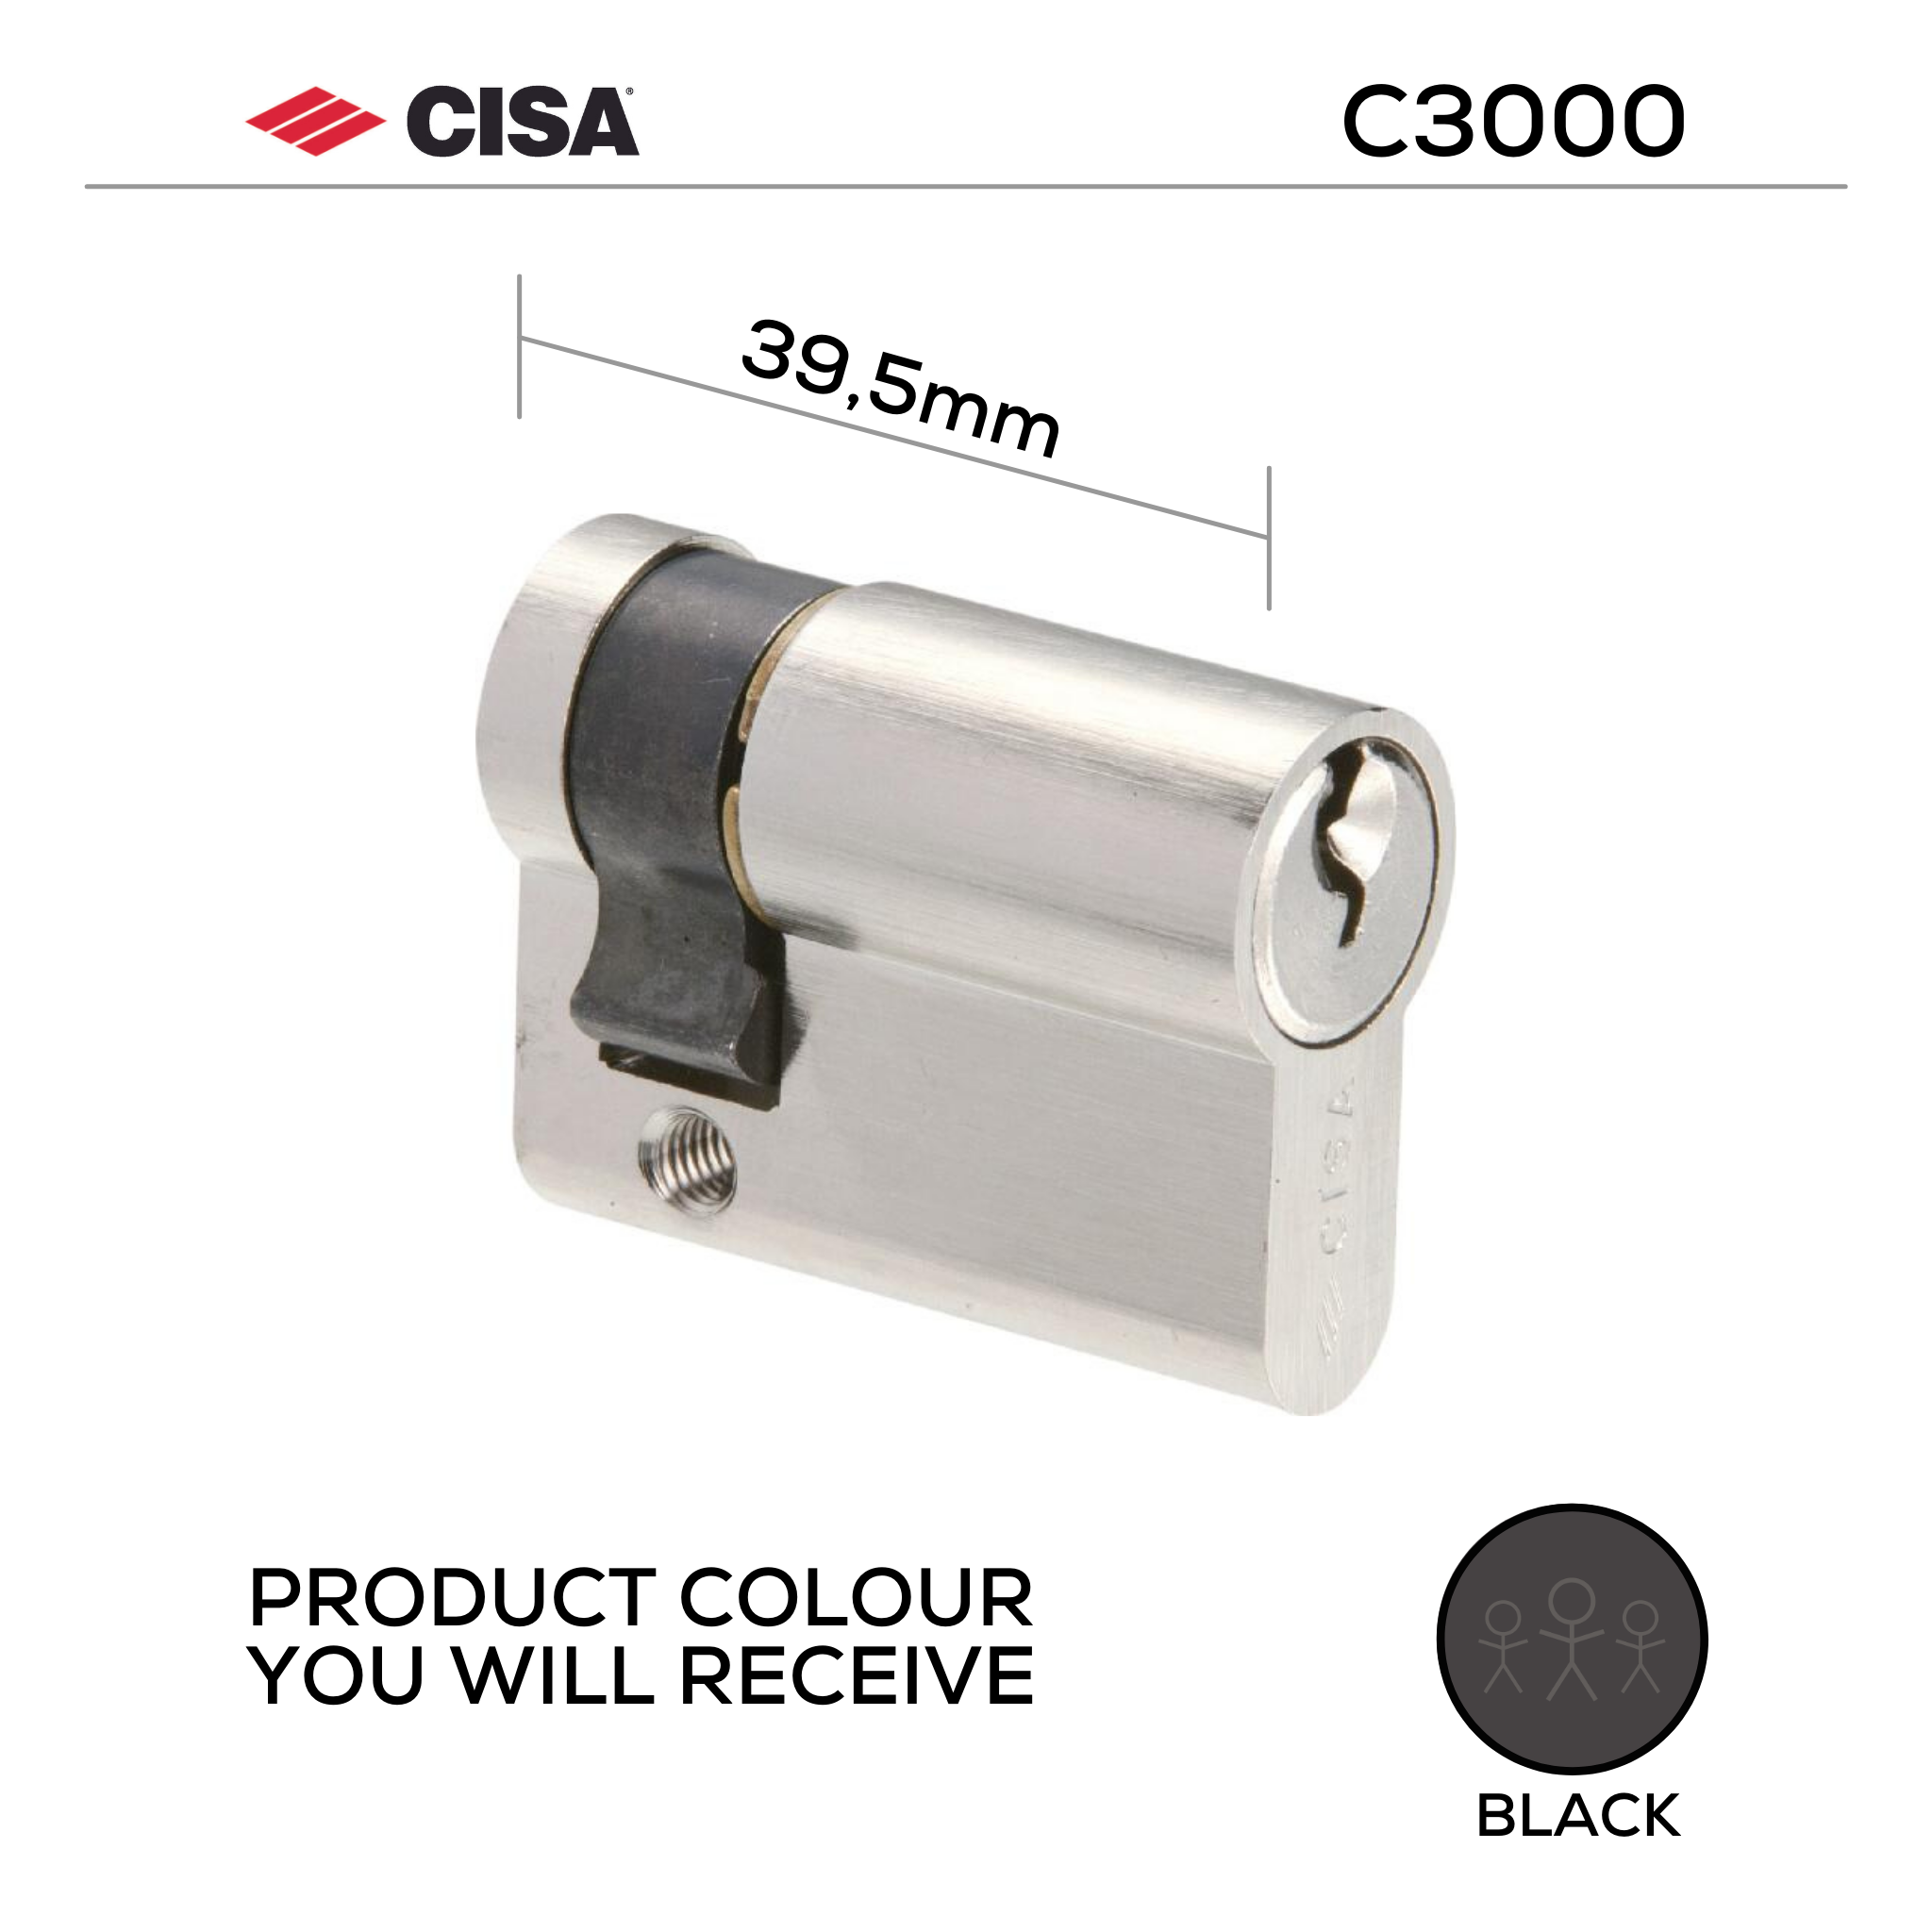 0N314-02-BLK-KD, 39.5mm - 29.5/10, Half (Single Cylinder), C3000, Key, Keyed to Differ (Standard), 3 Keys, 6 Pin, Black, CISA